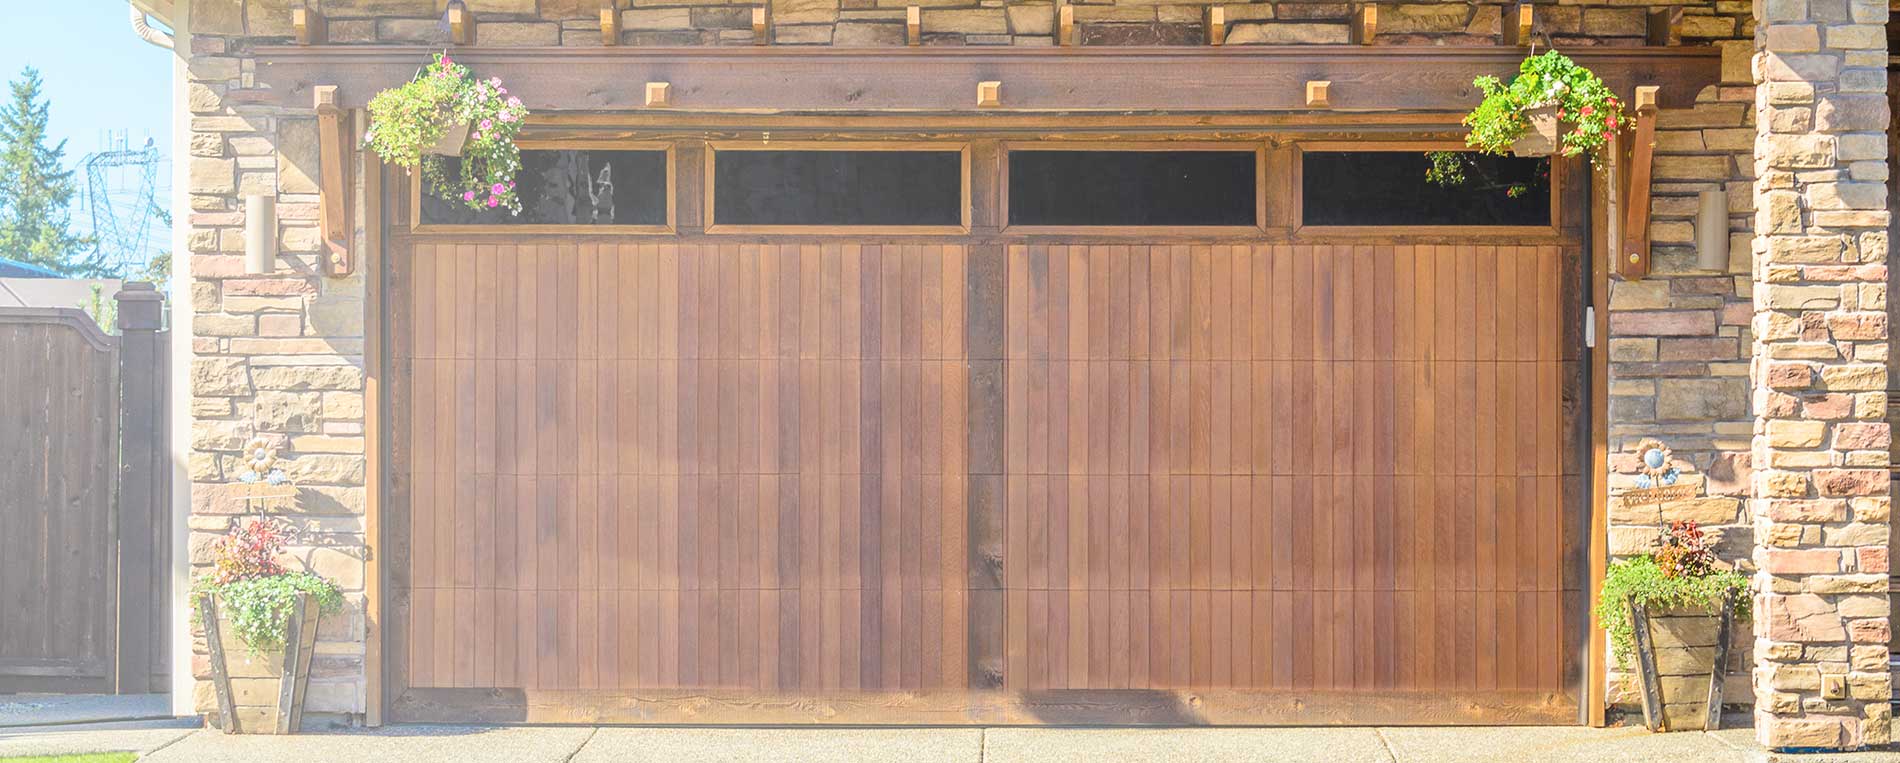 Same-day Repair Services For Buffalo Grove Garage Doors